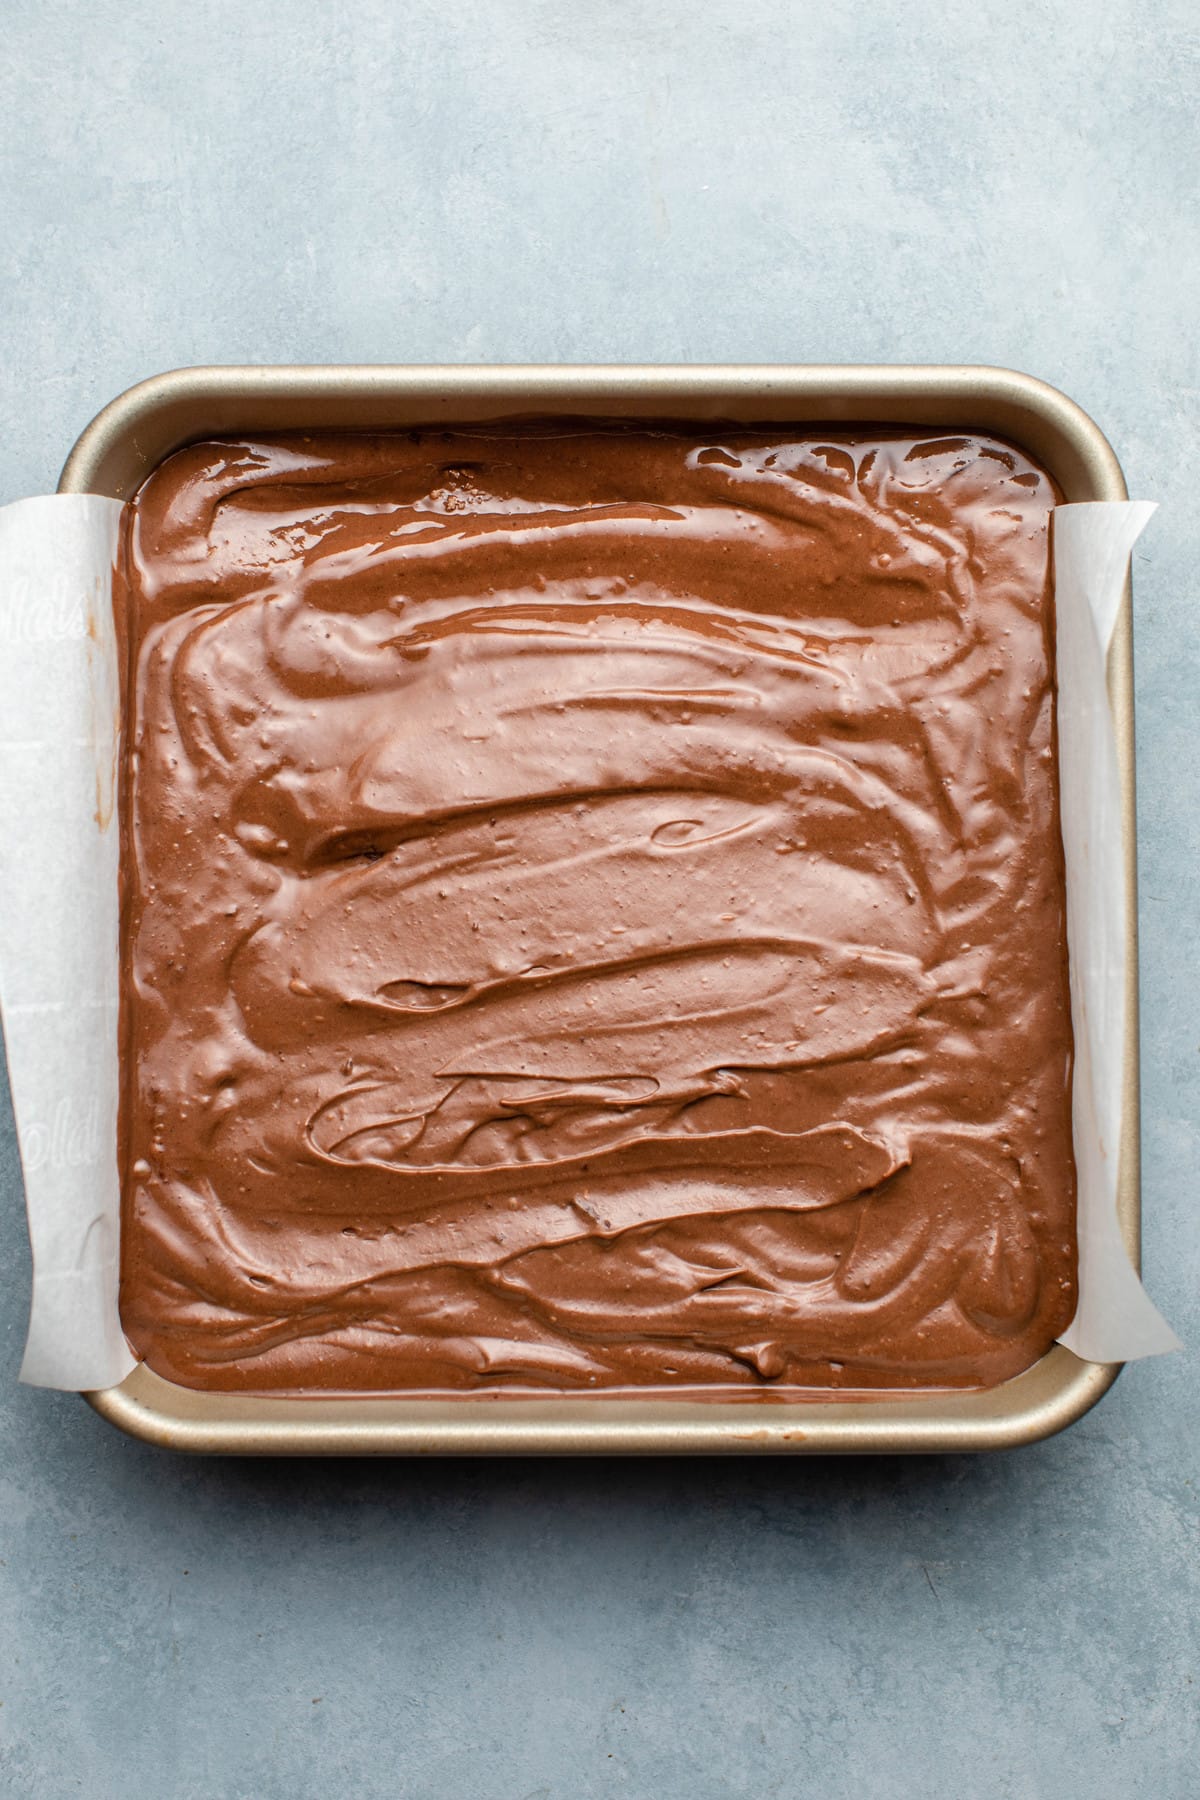 chocolate filling spread across graham cracker base in baking tin